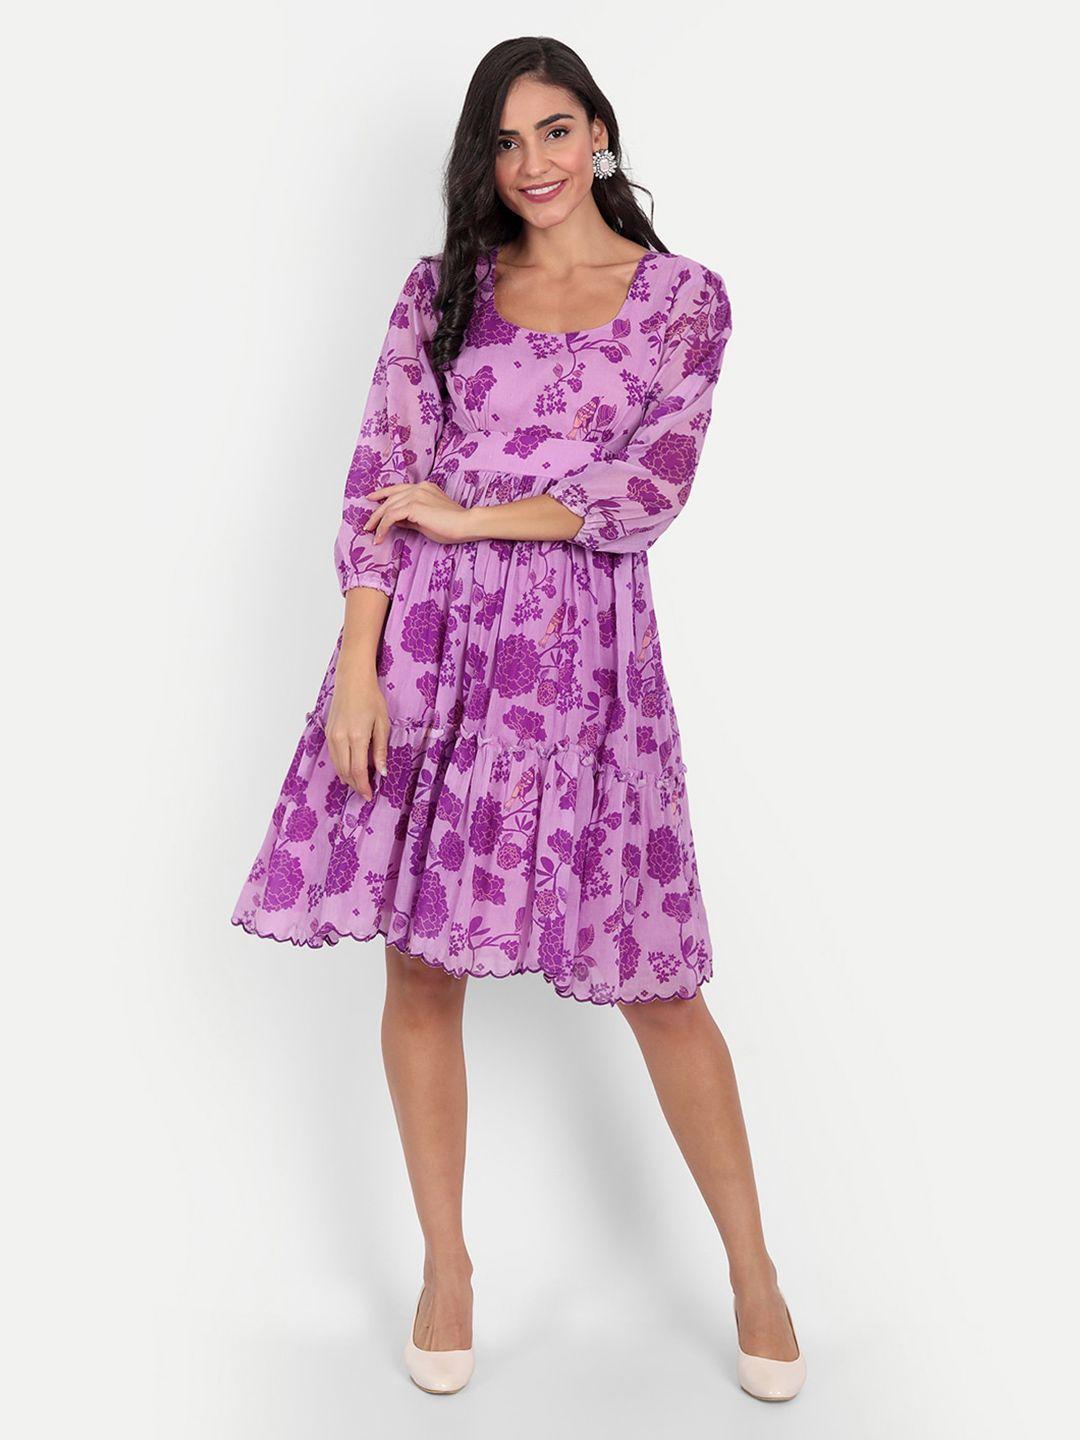 kapasriti-purple-floral-printed-cotton-fit-and-flare-dress